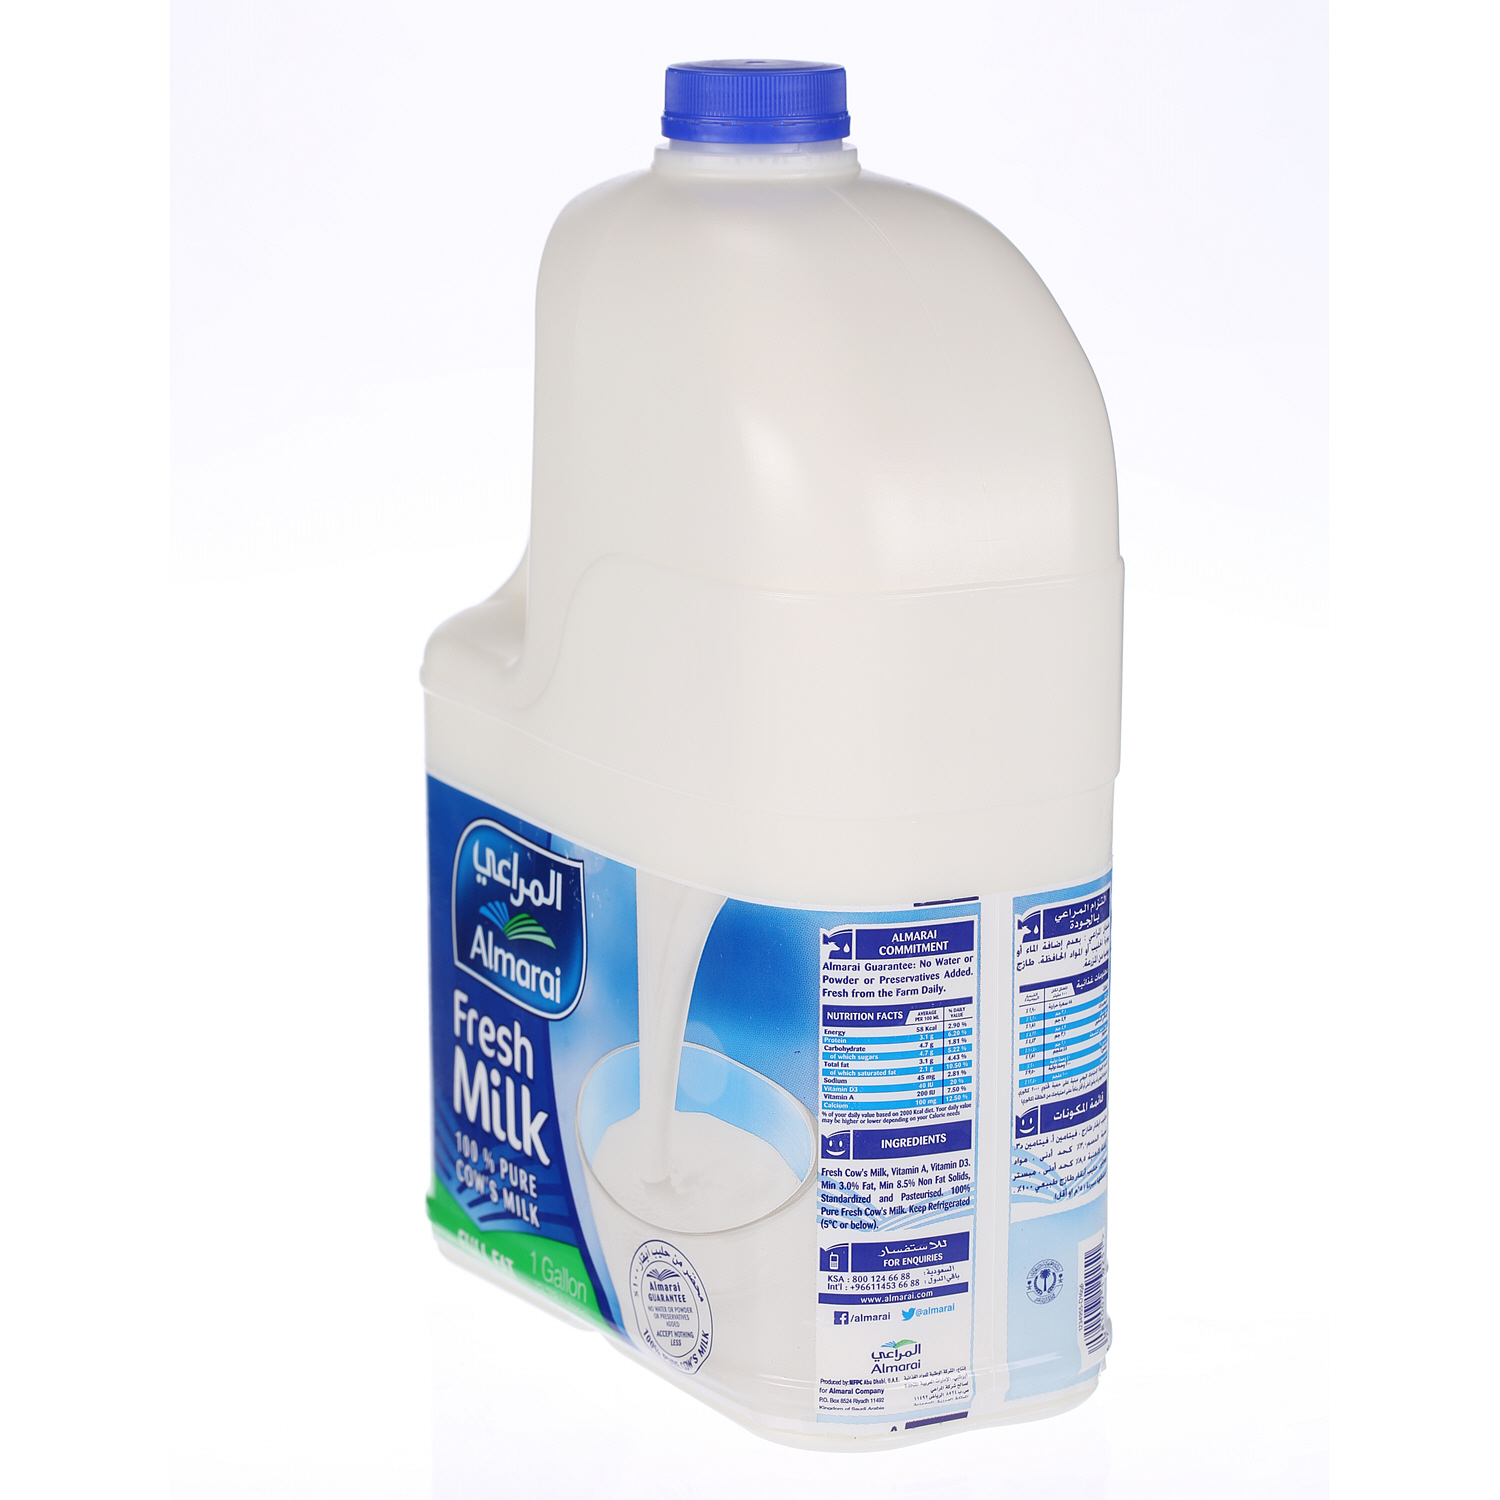 Al Marai Fresh Milk Full Cream 1 Gallon